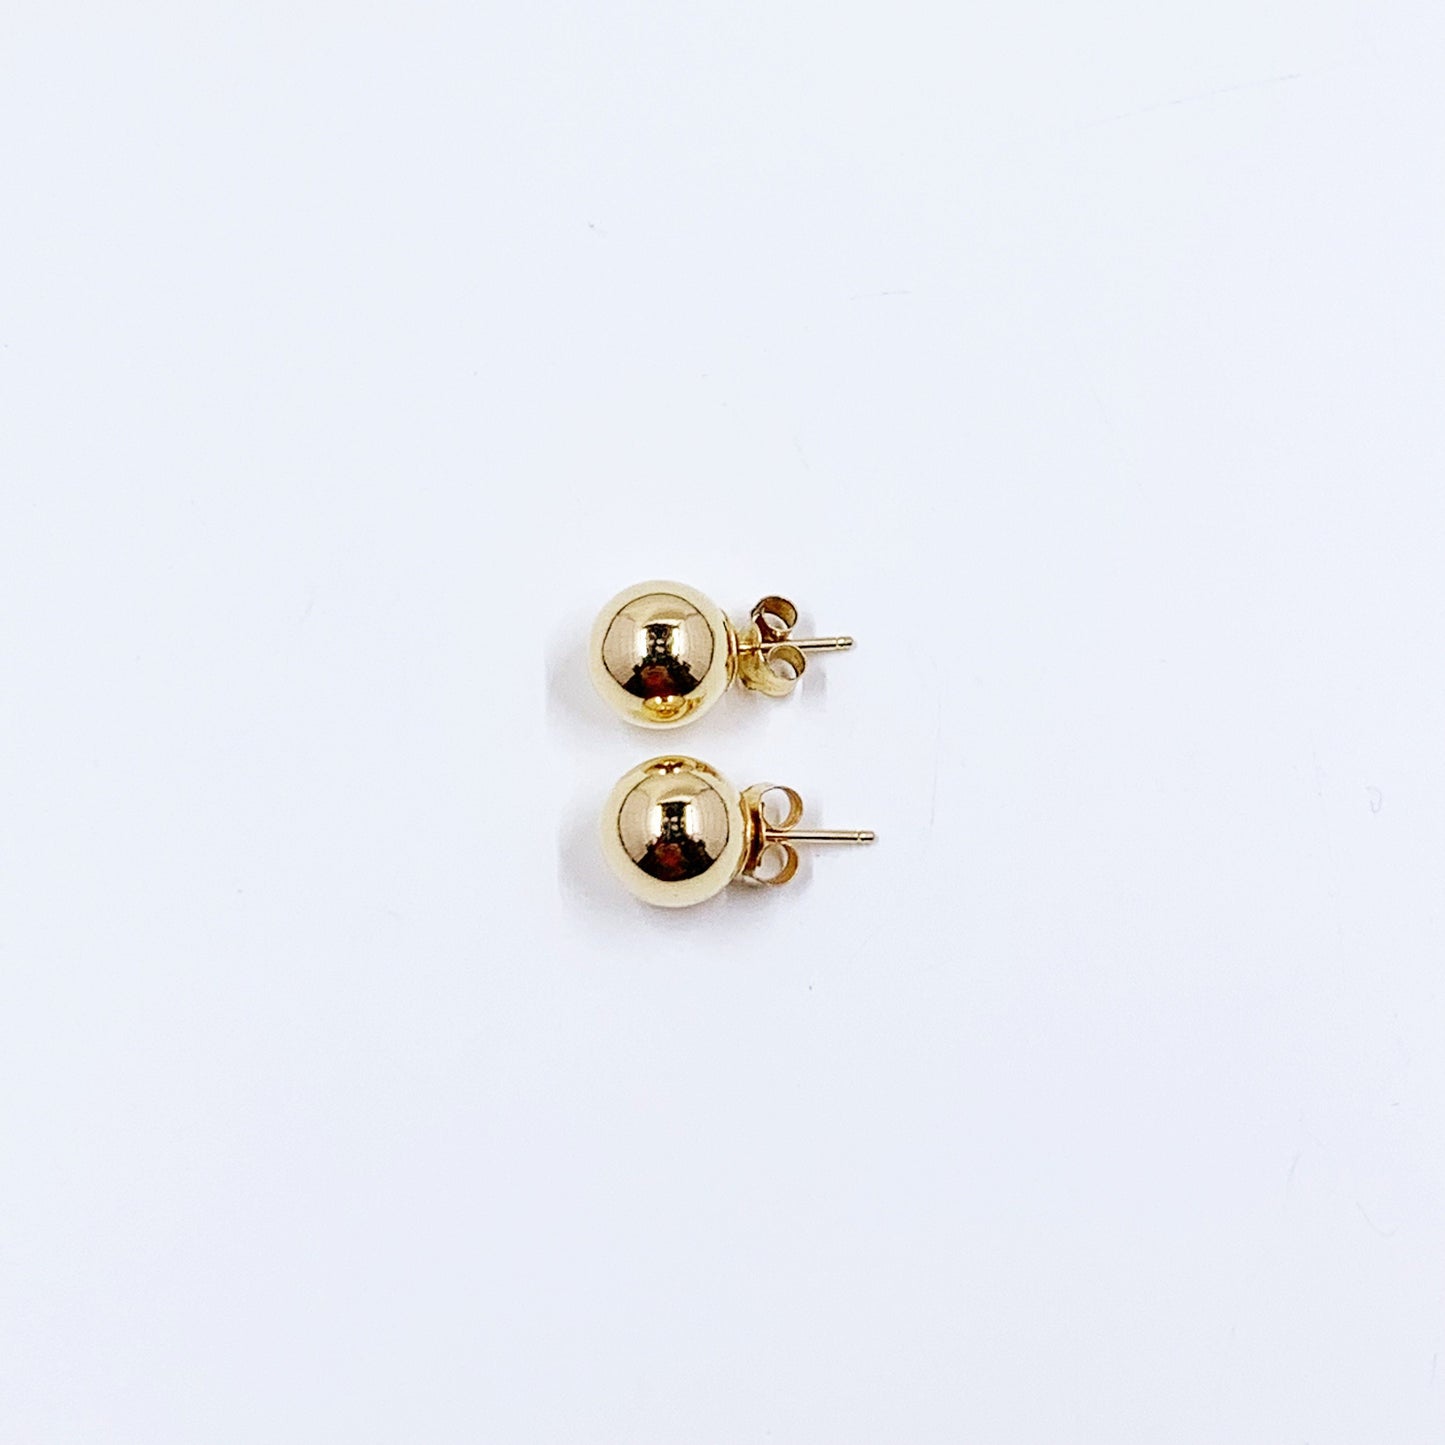 Vintage 14K Gold Ball Stud Earrings | 8.9 mm Gold Ball Stud Earrings